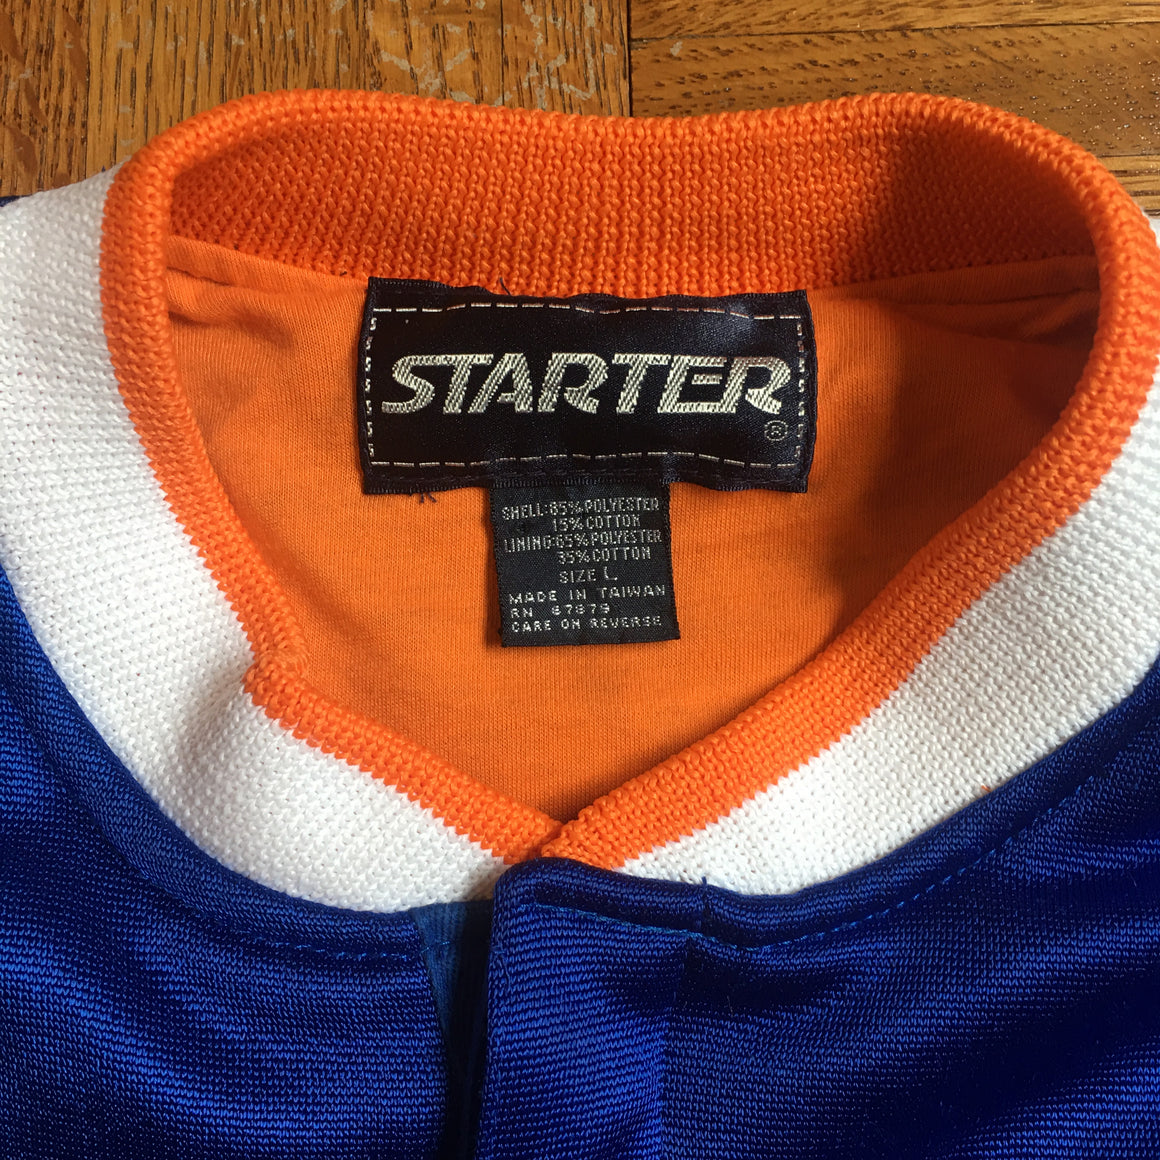 Denver Broncos sweatshirt - L / XL